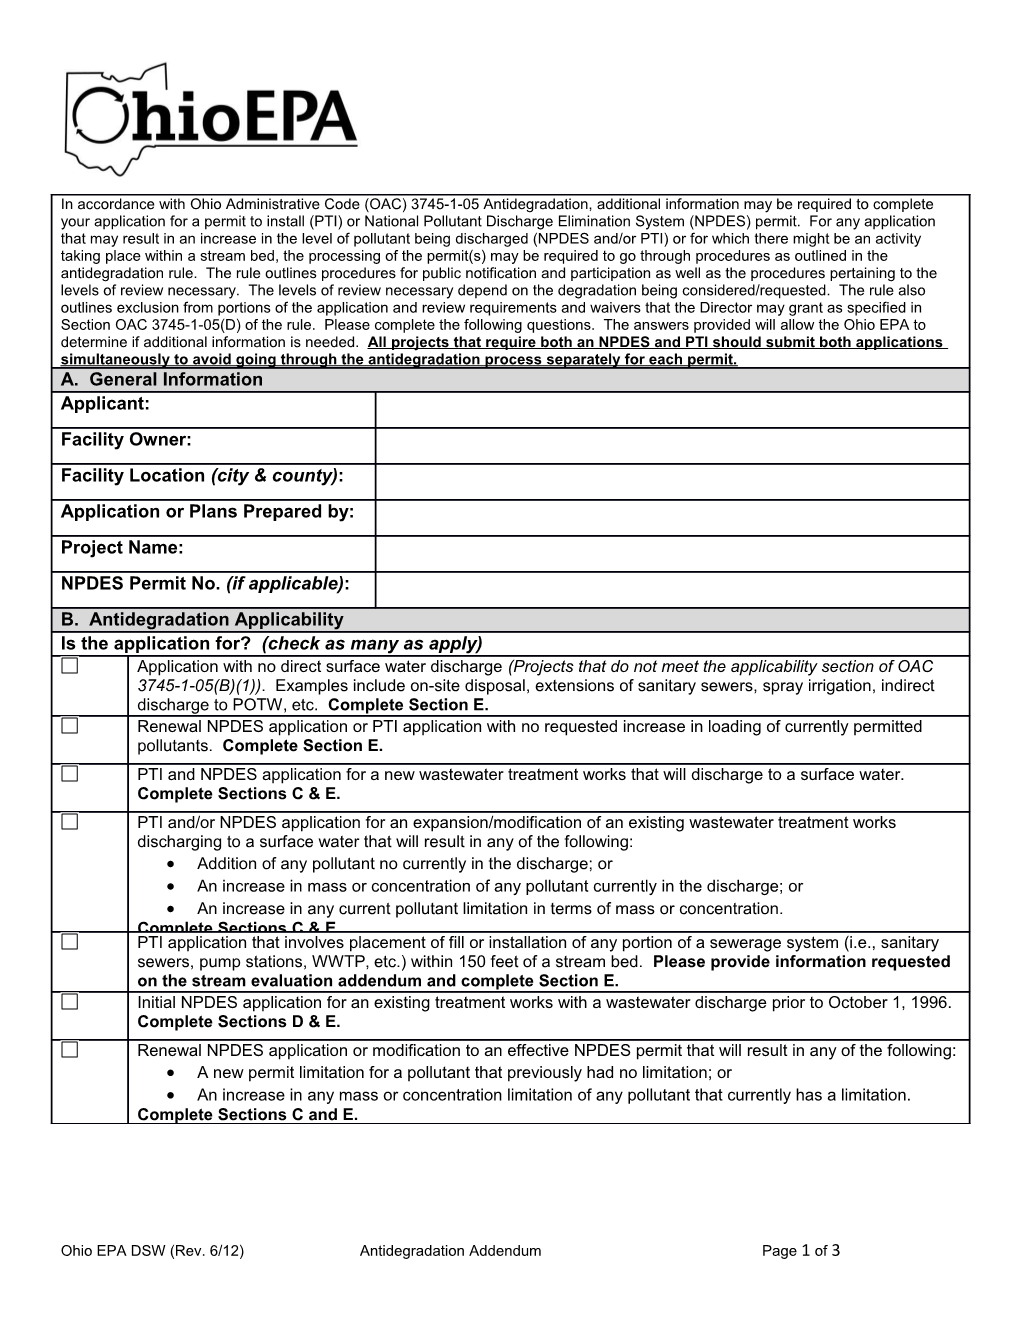 Ohio EPA DSW (Rev. 6/12)Antidegradation Addendumpage 3 of 3